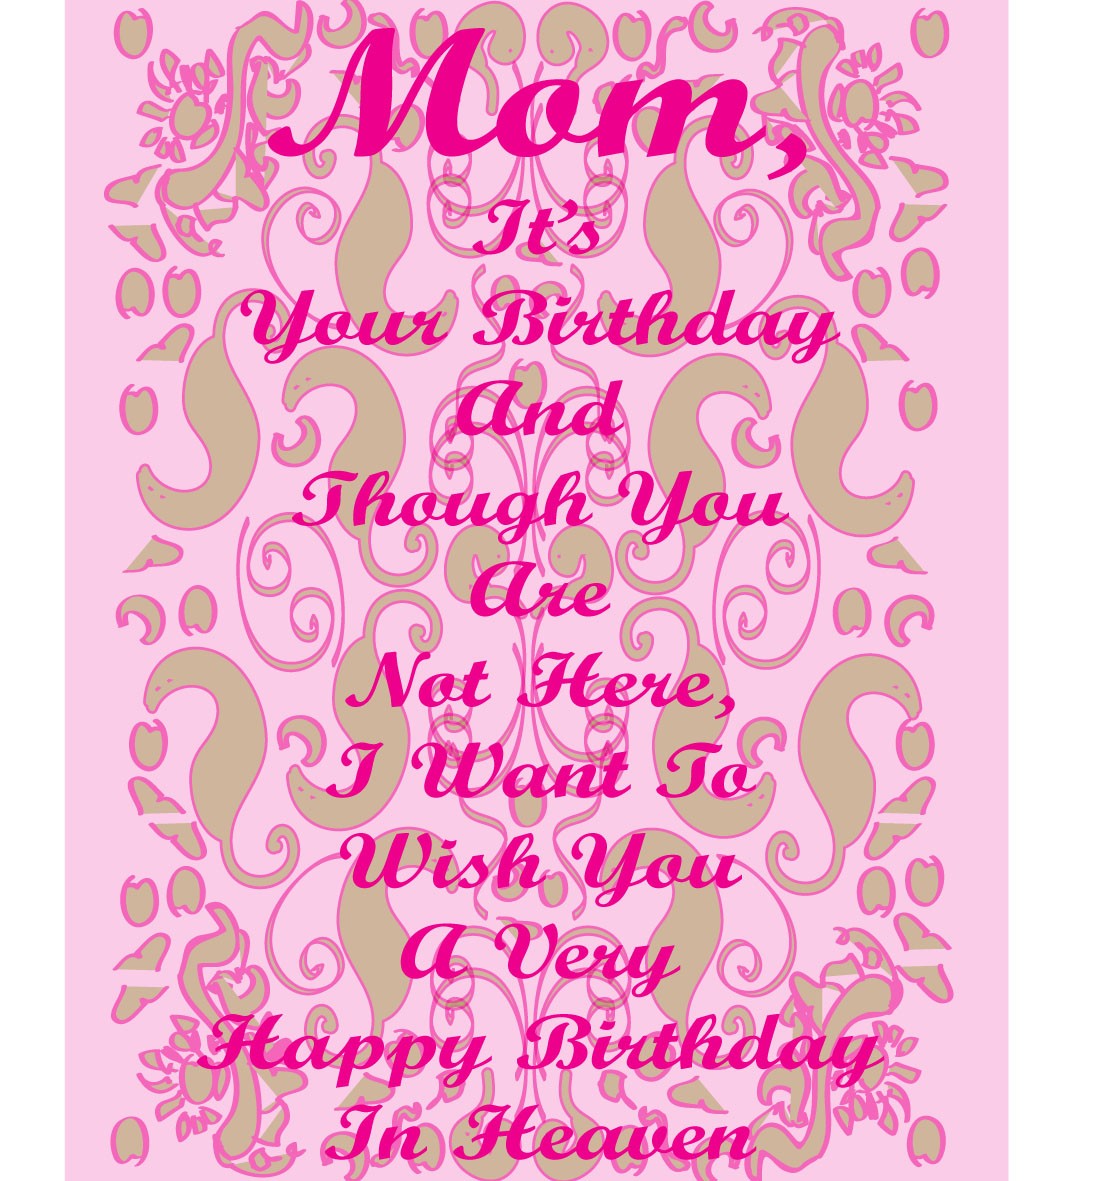 happy birthday mom poems from son